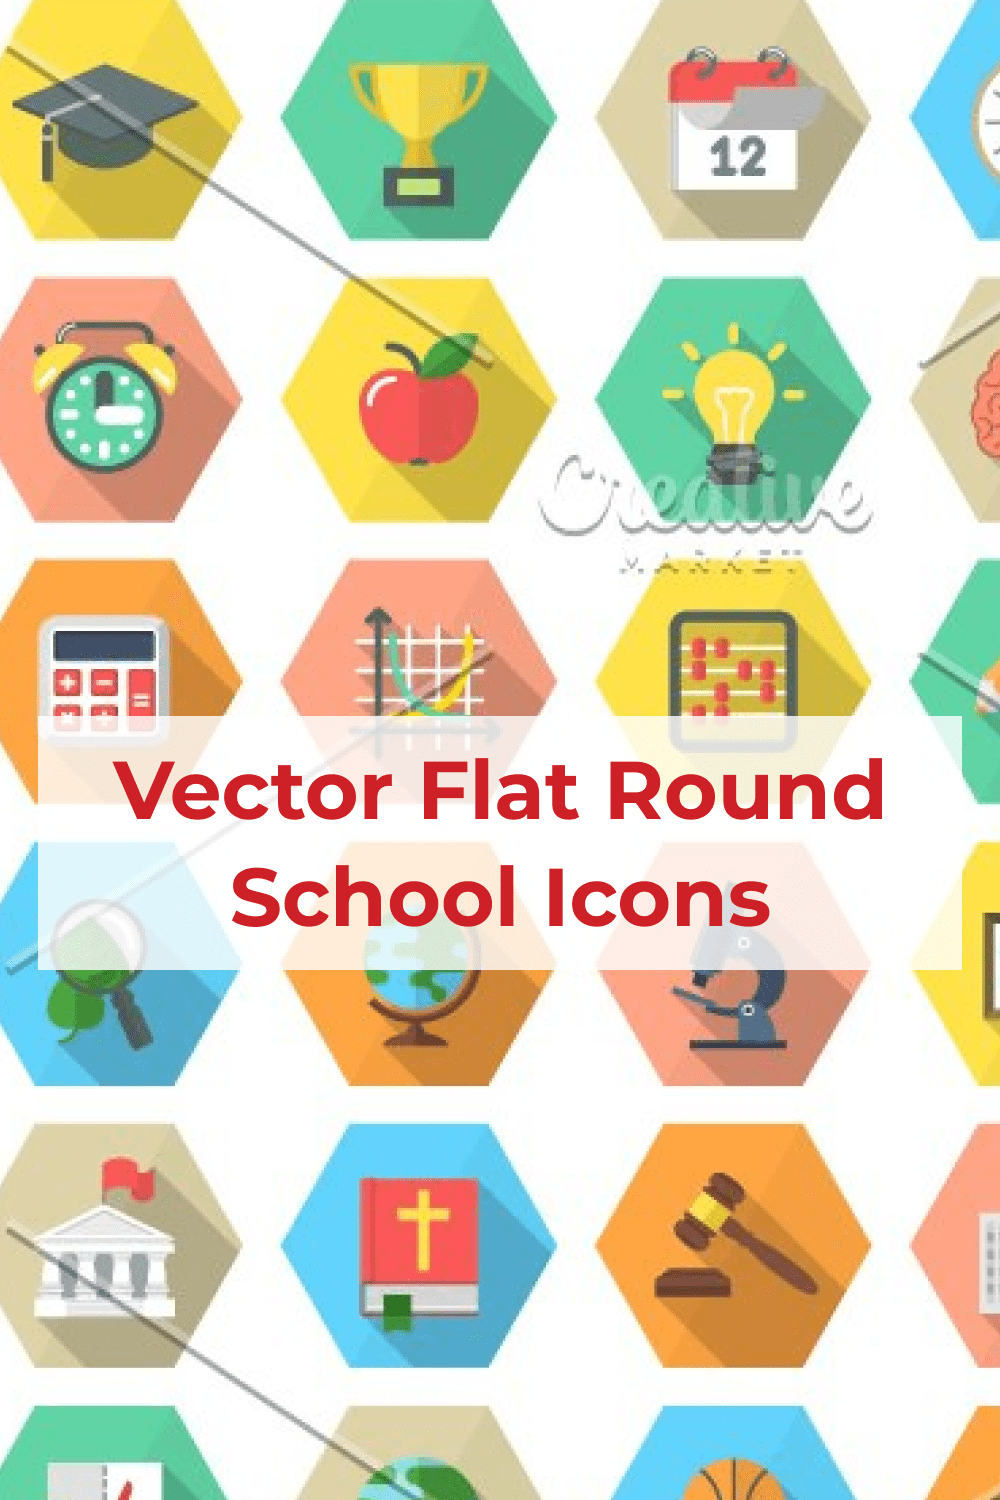 Vector Flat Round School Icons - Pinterest.